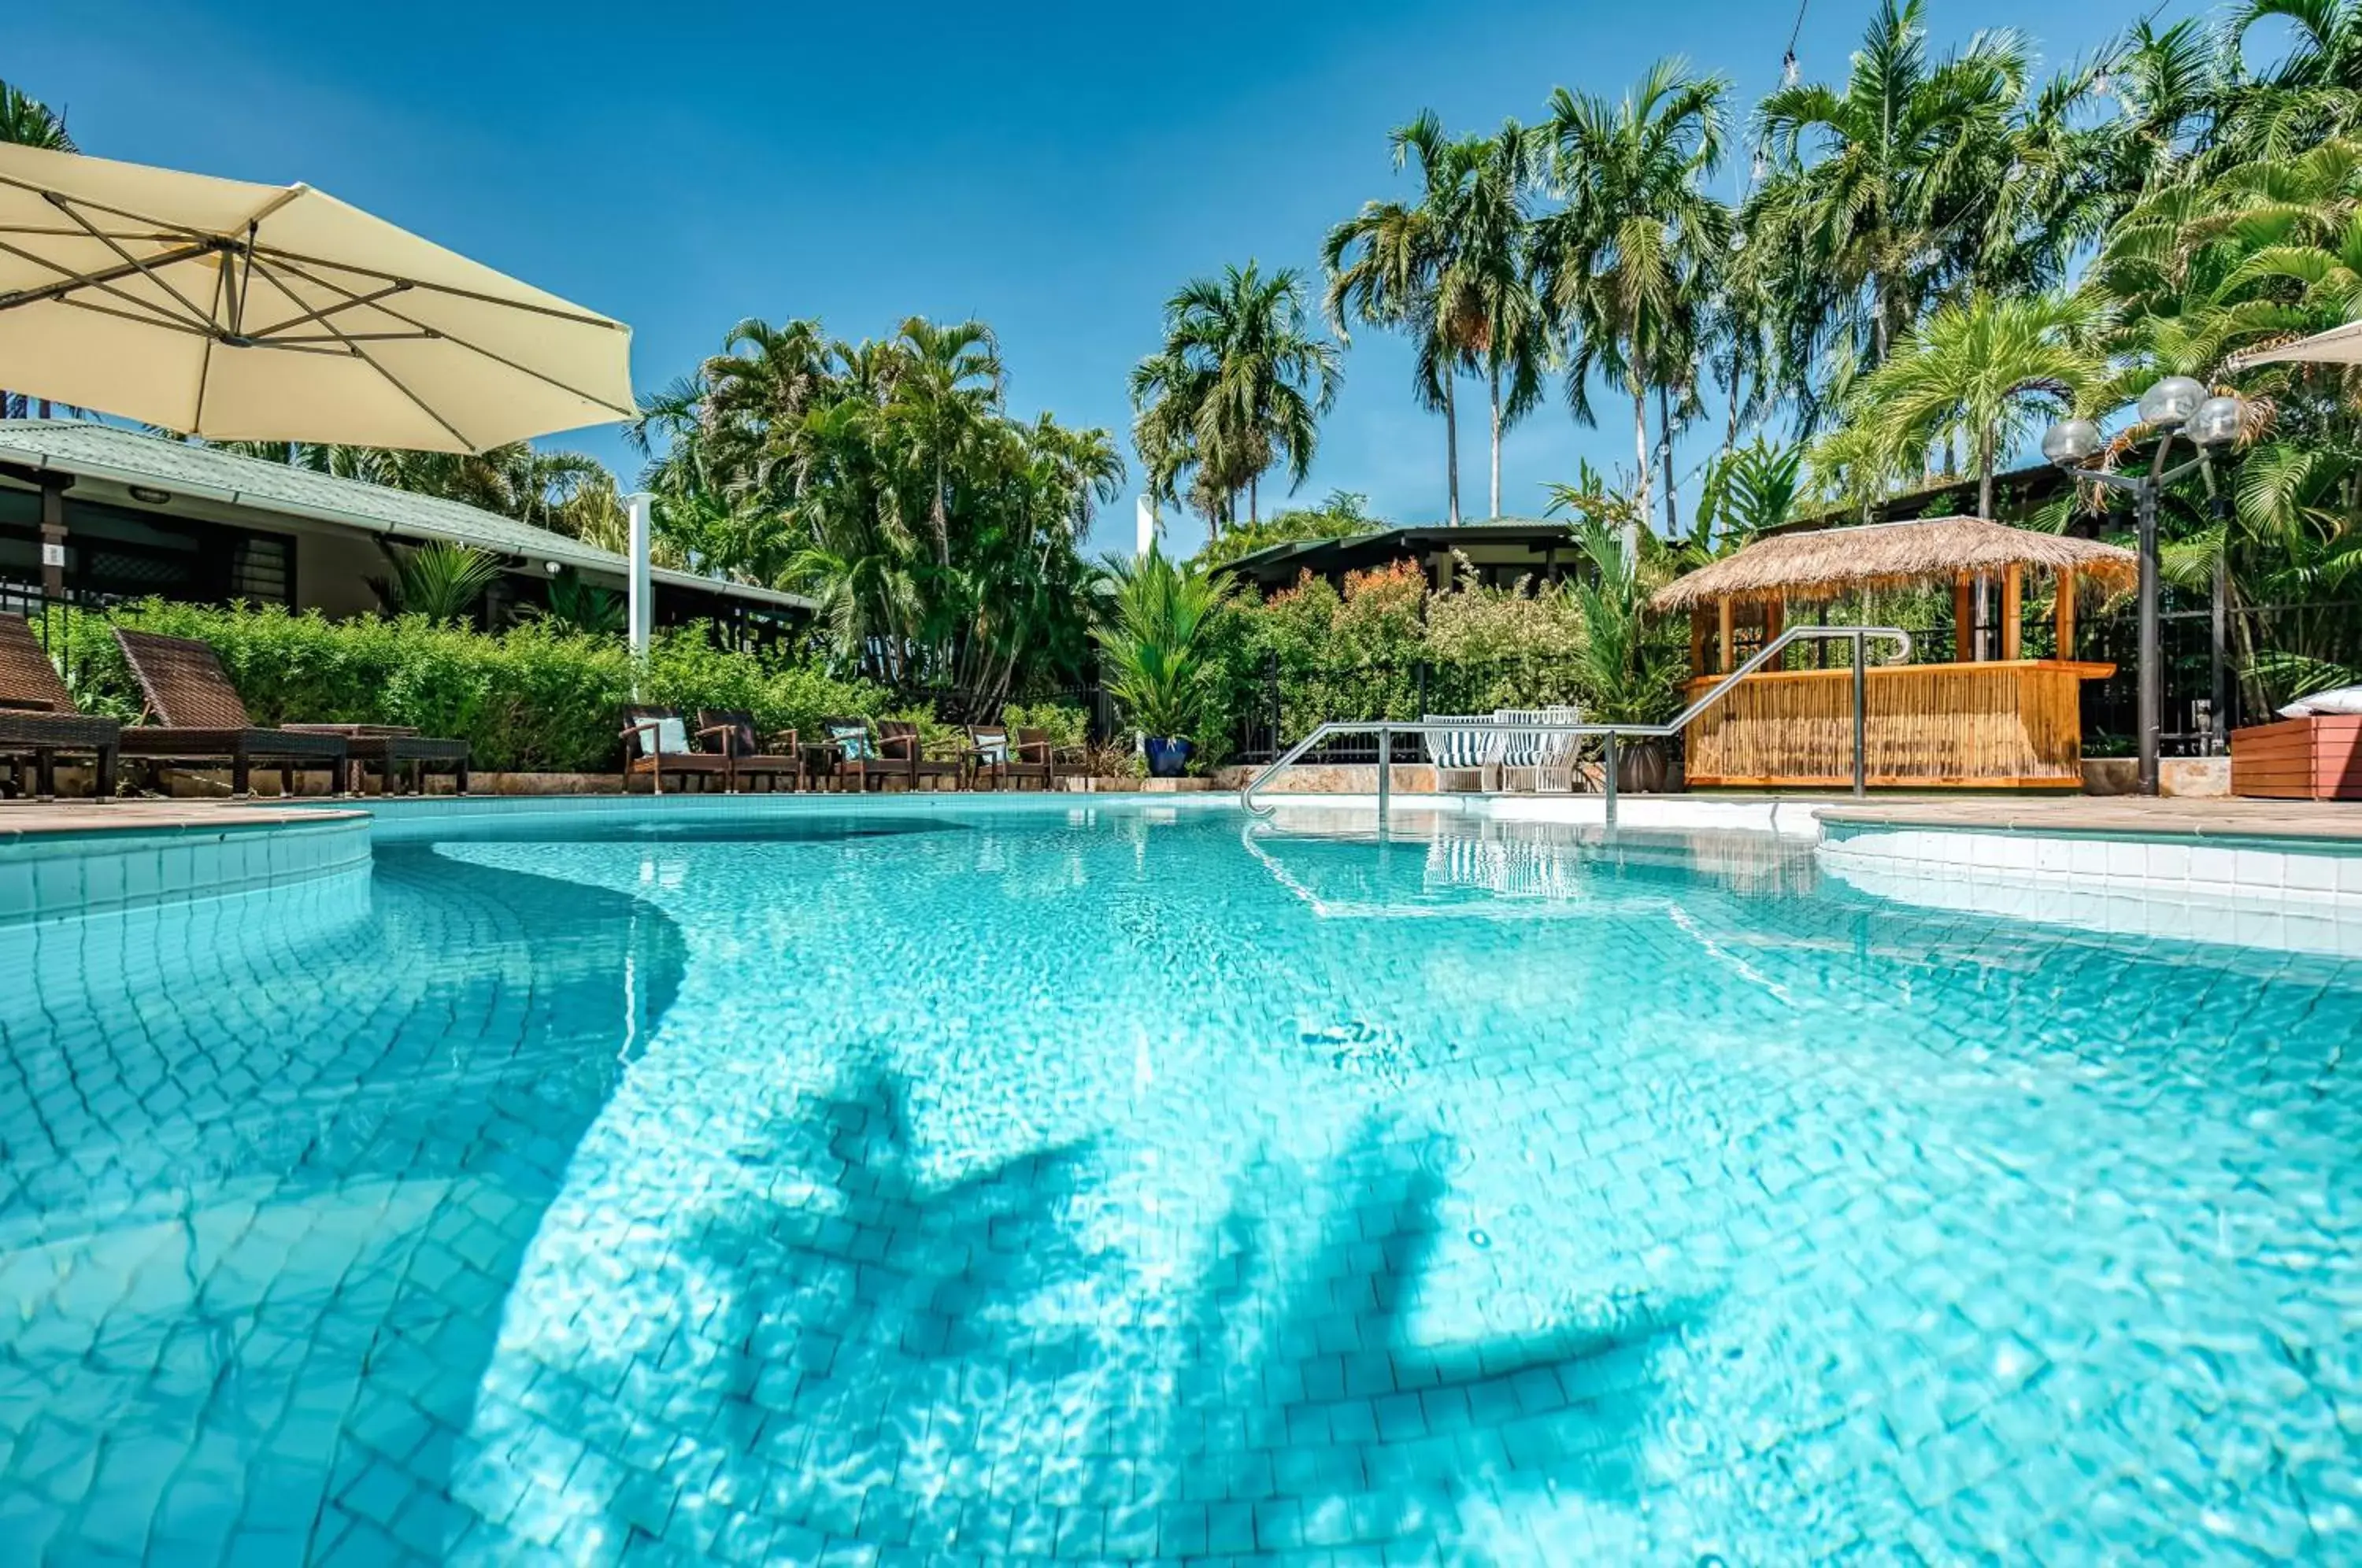 Swimming Pool in Palms City Resort